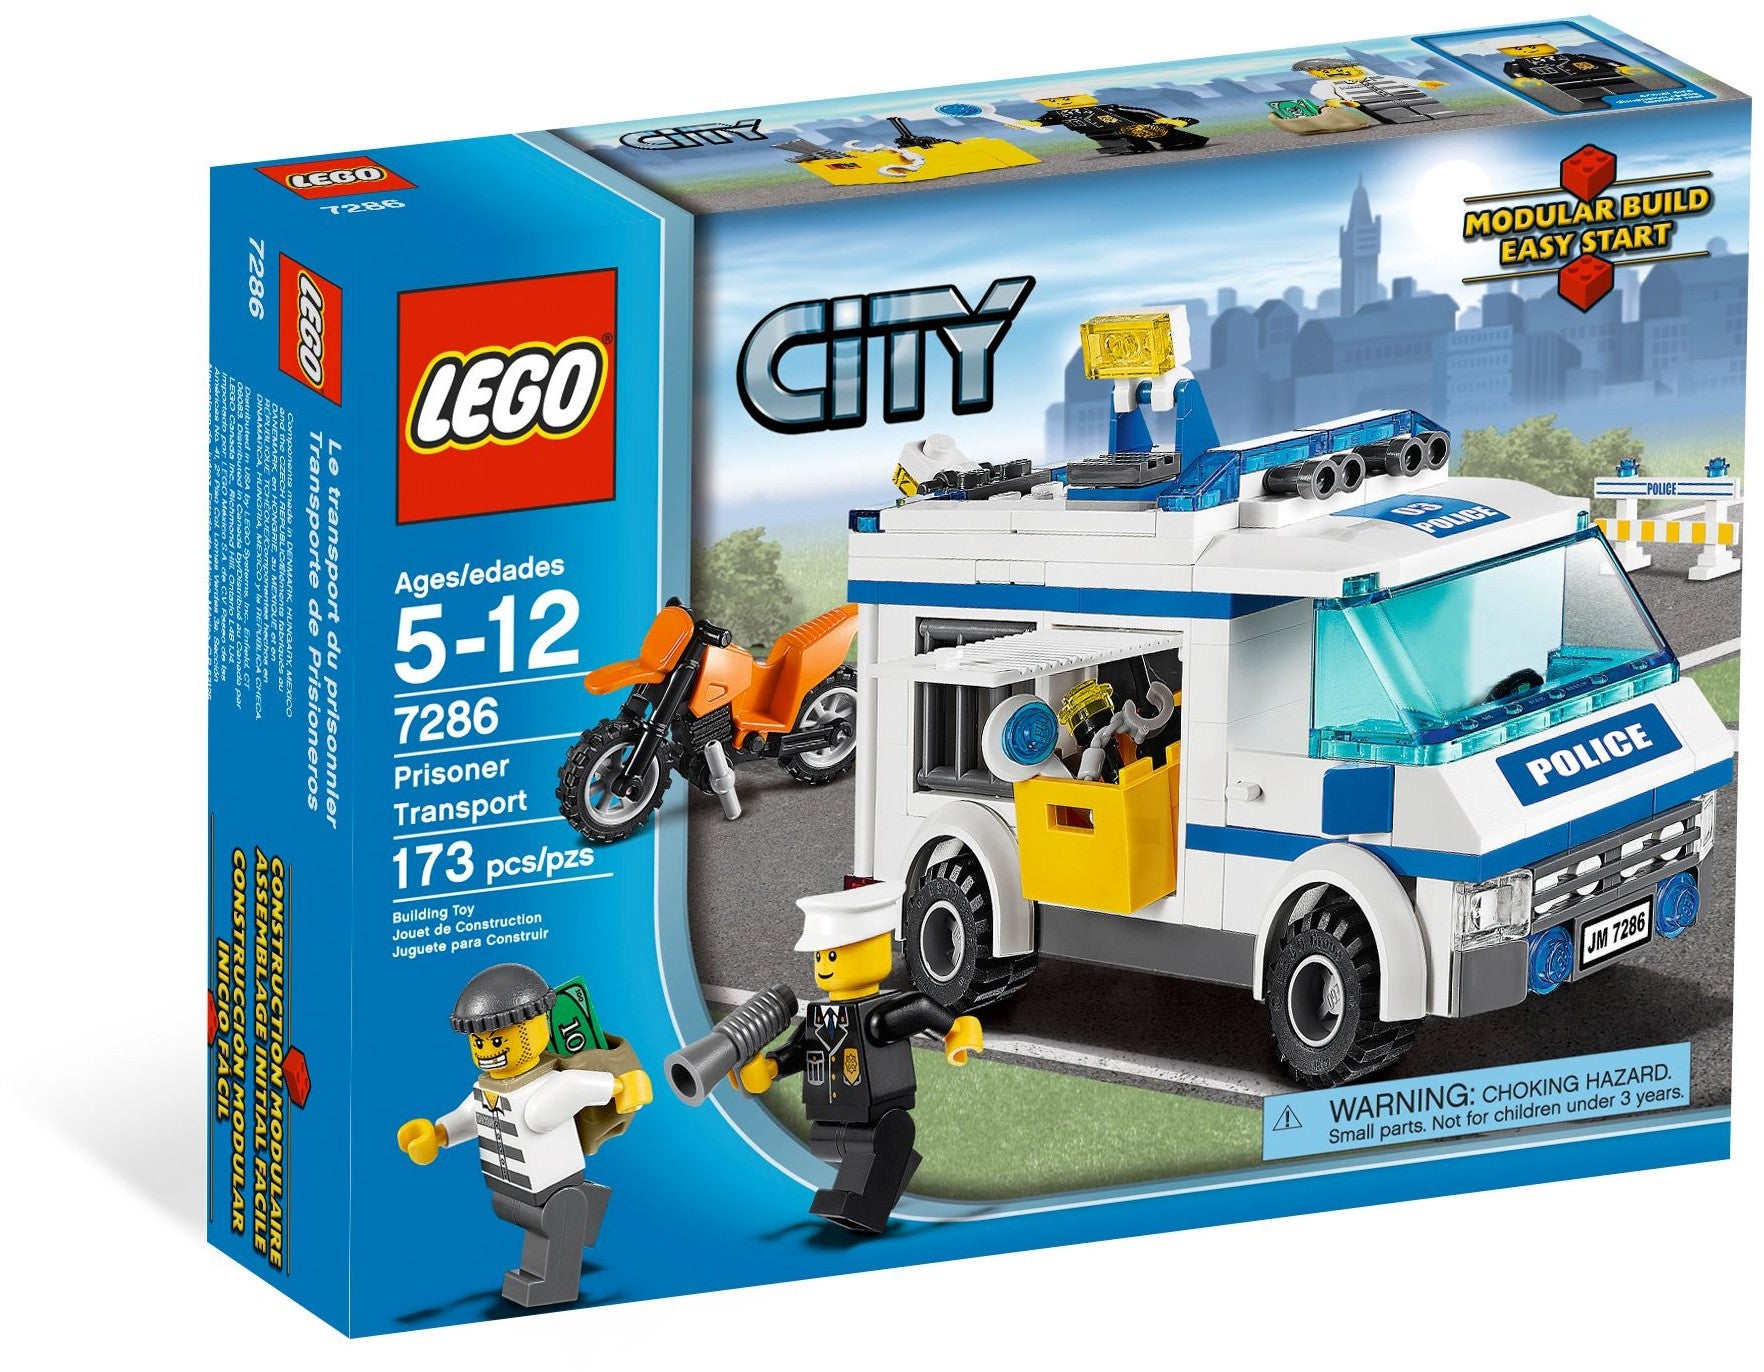 Lego City 7286 - Prisoner Transport